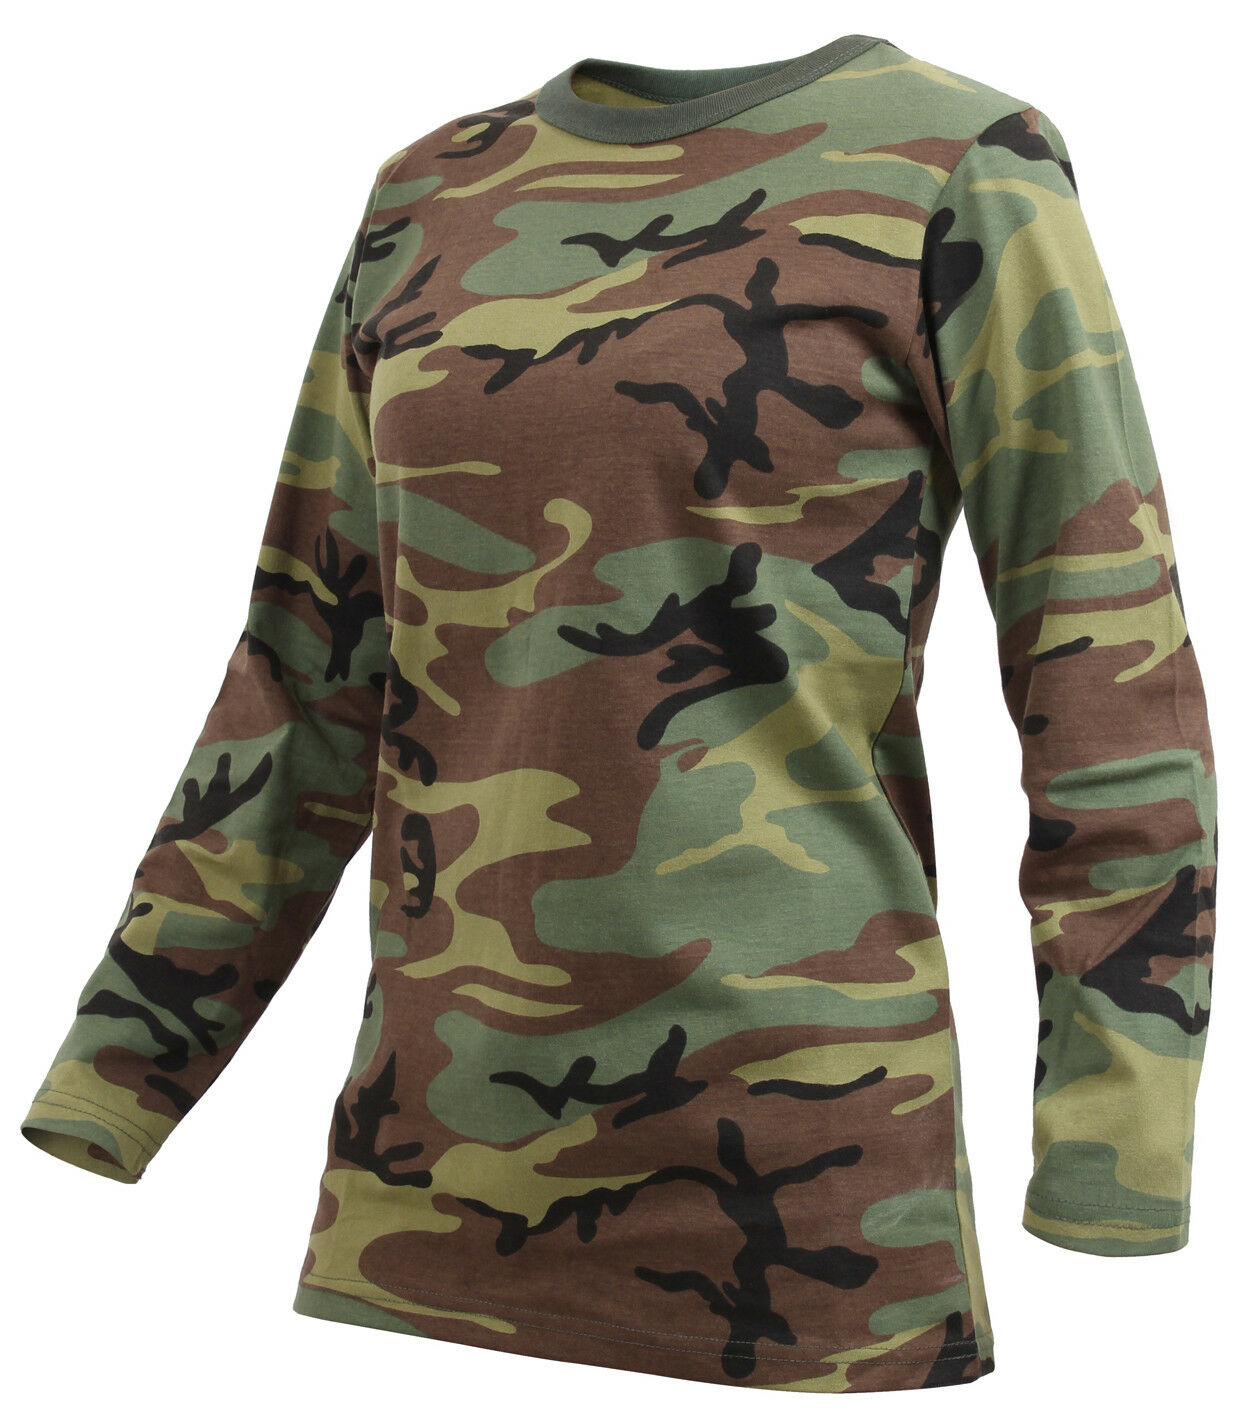 Womens LS Camo T-shirt Woodland Camouflage Long Sleeve Tee Shirt Rothco 3678